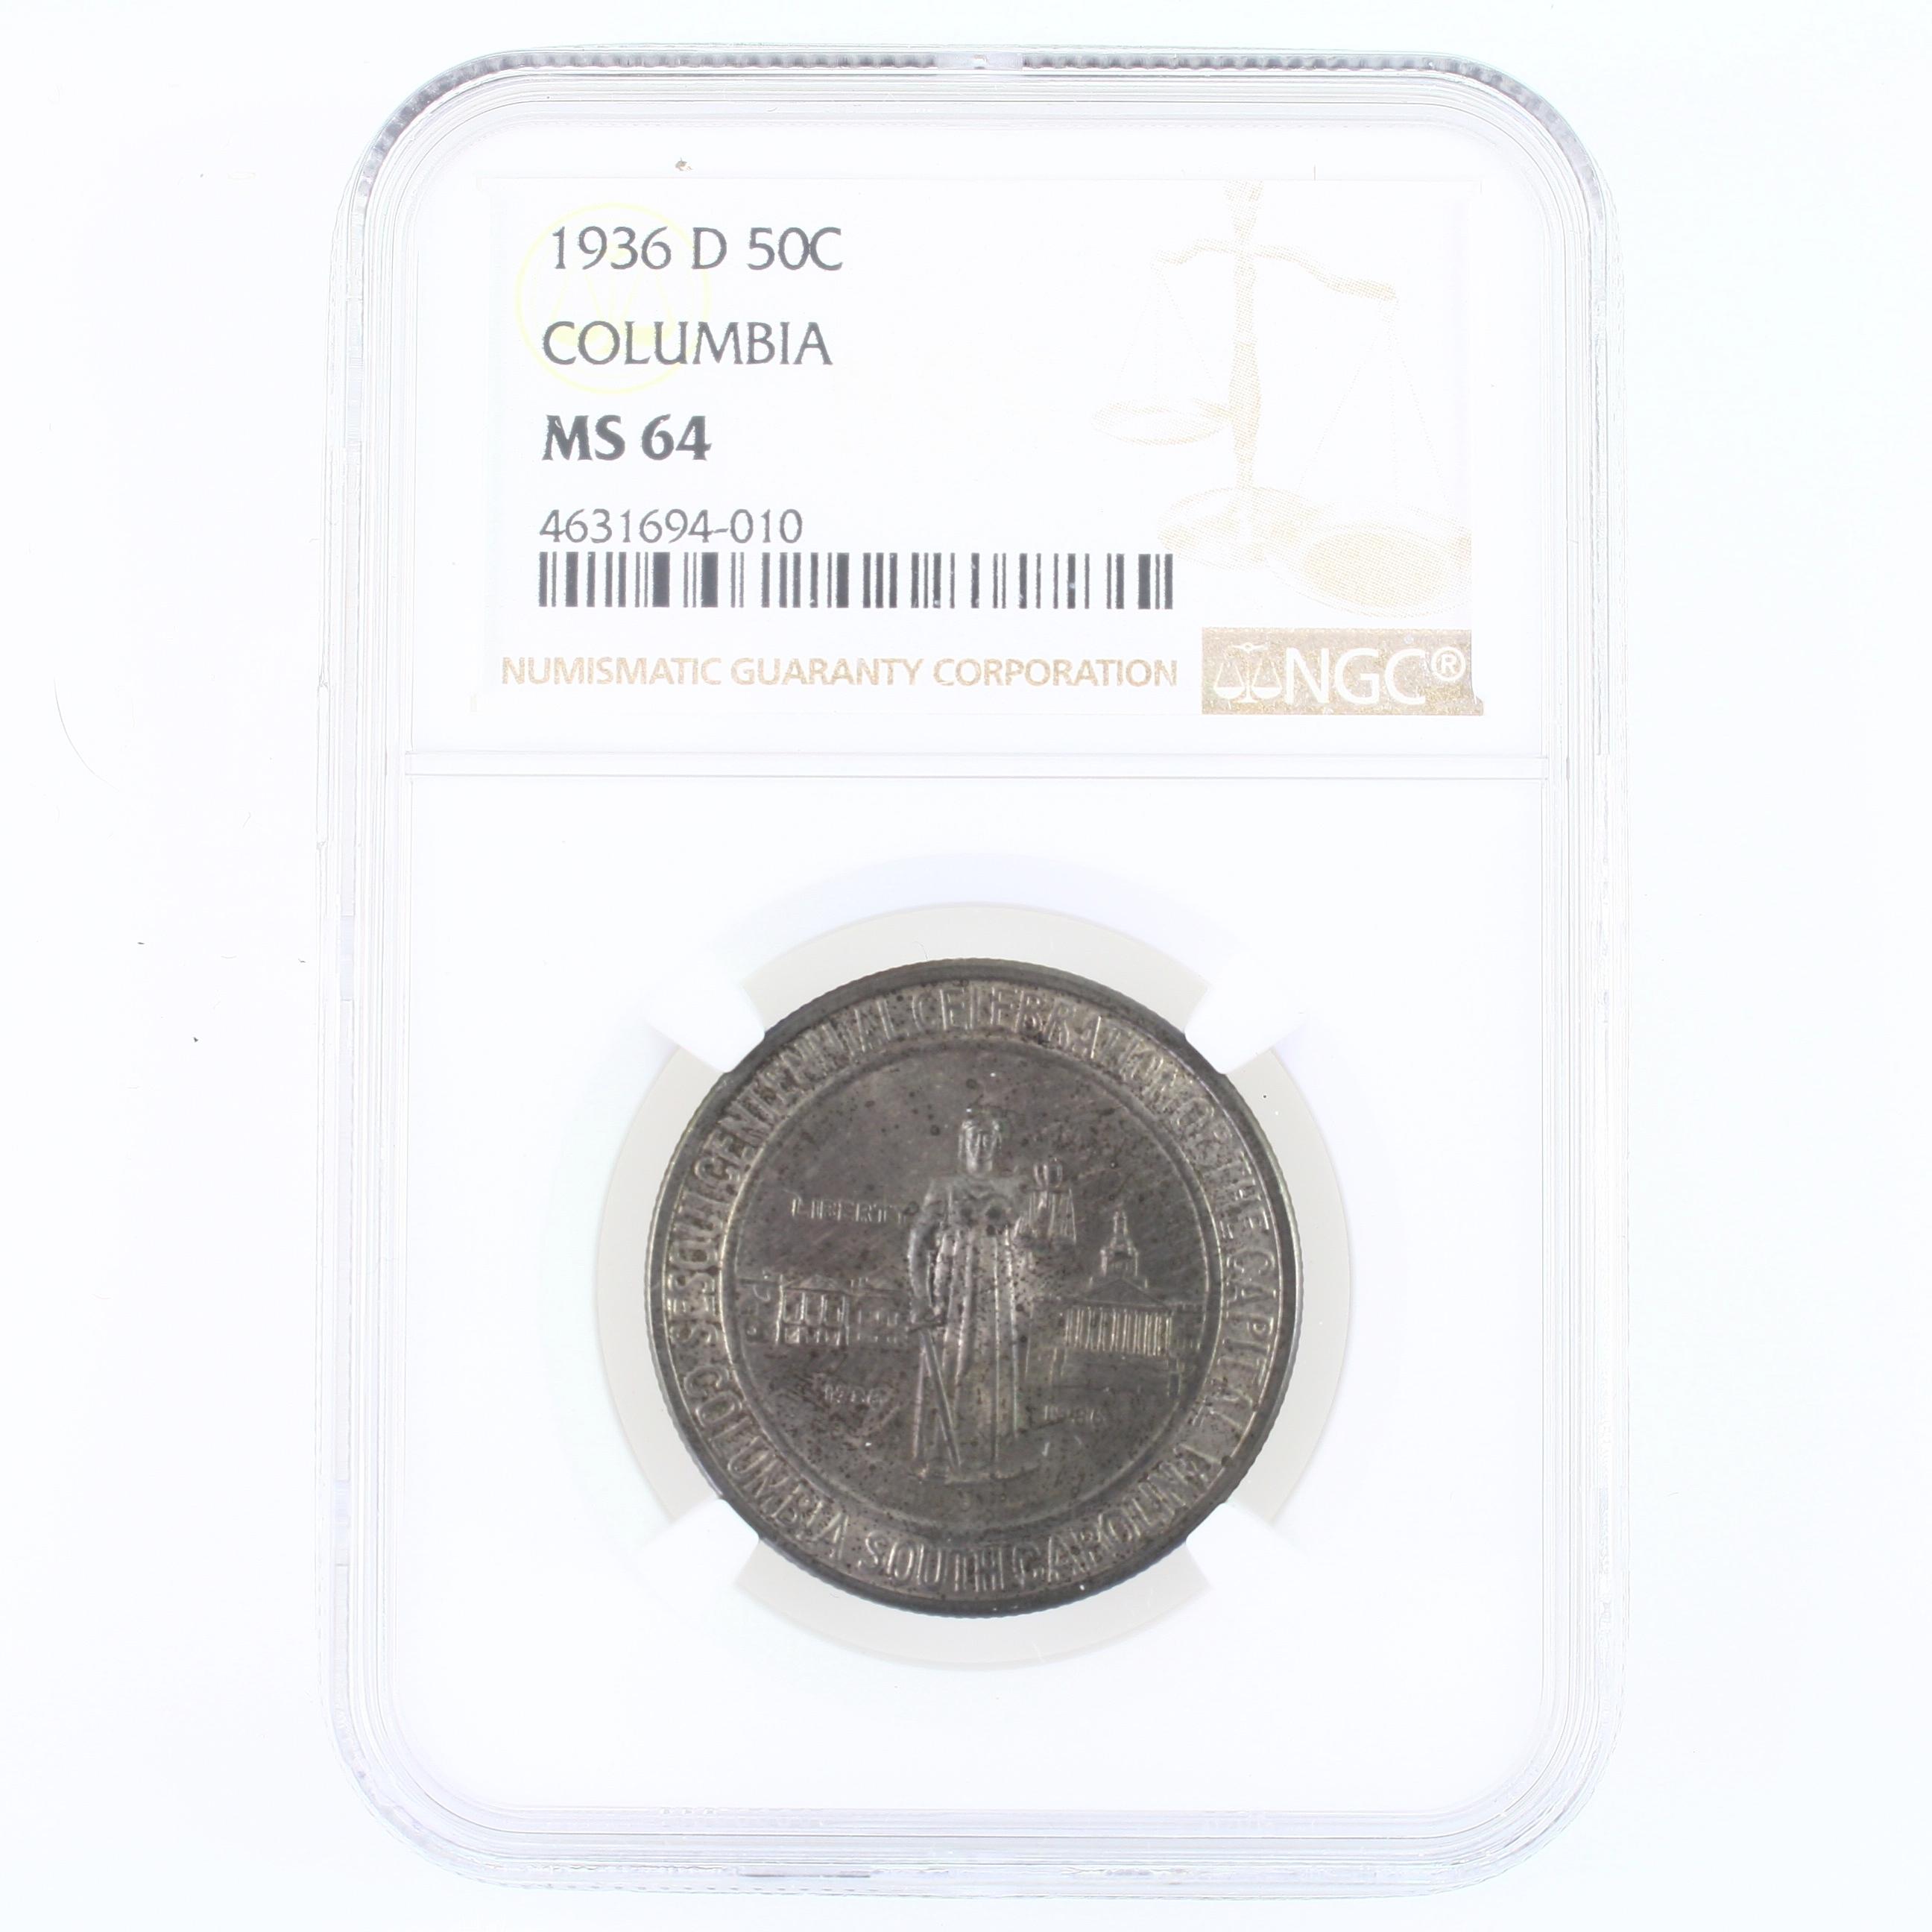 Certified 1936-D U.S. Columbia commemorative half dollar